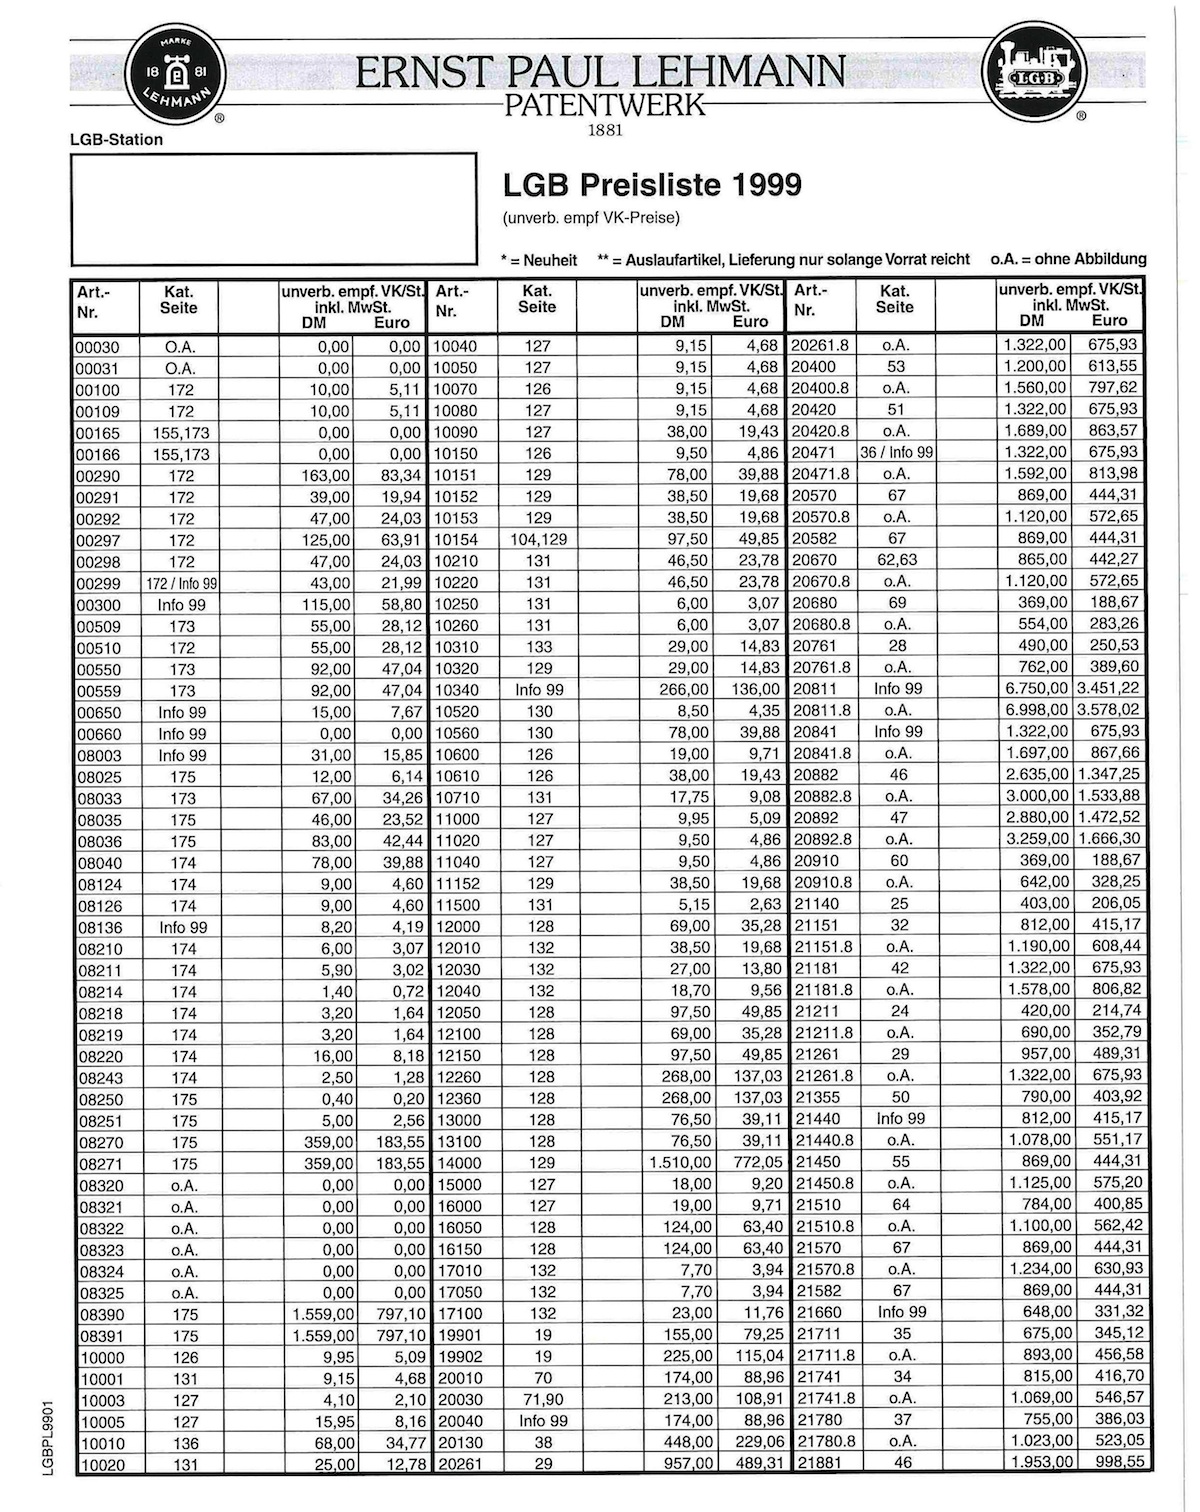 LGB Preisliste (Price list) 1999